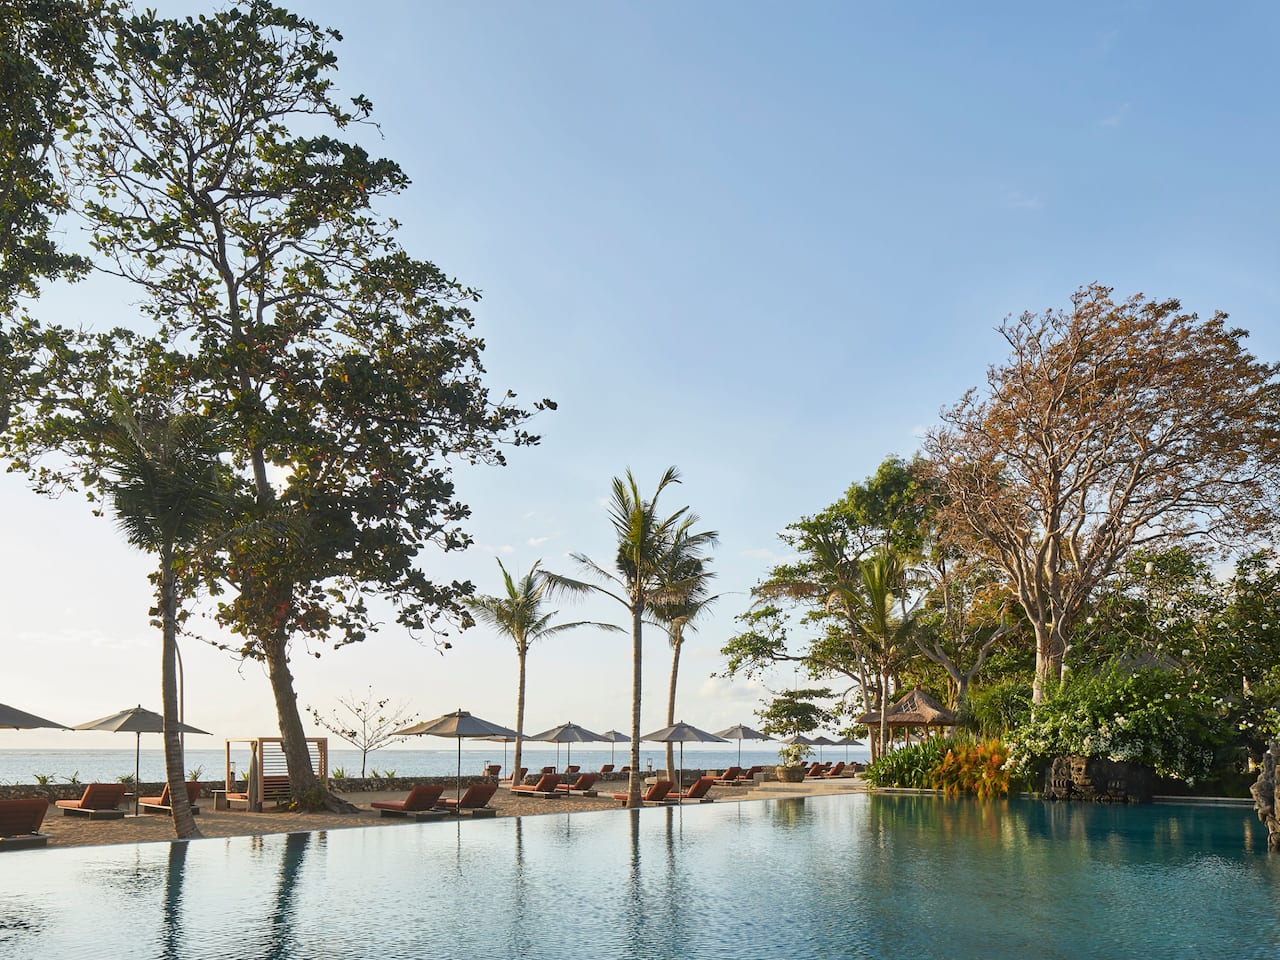 Infinity Pool at Andaz Bali, Sanur